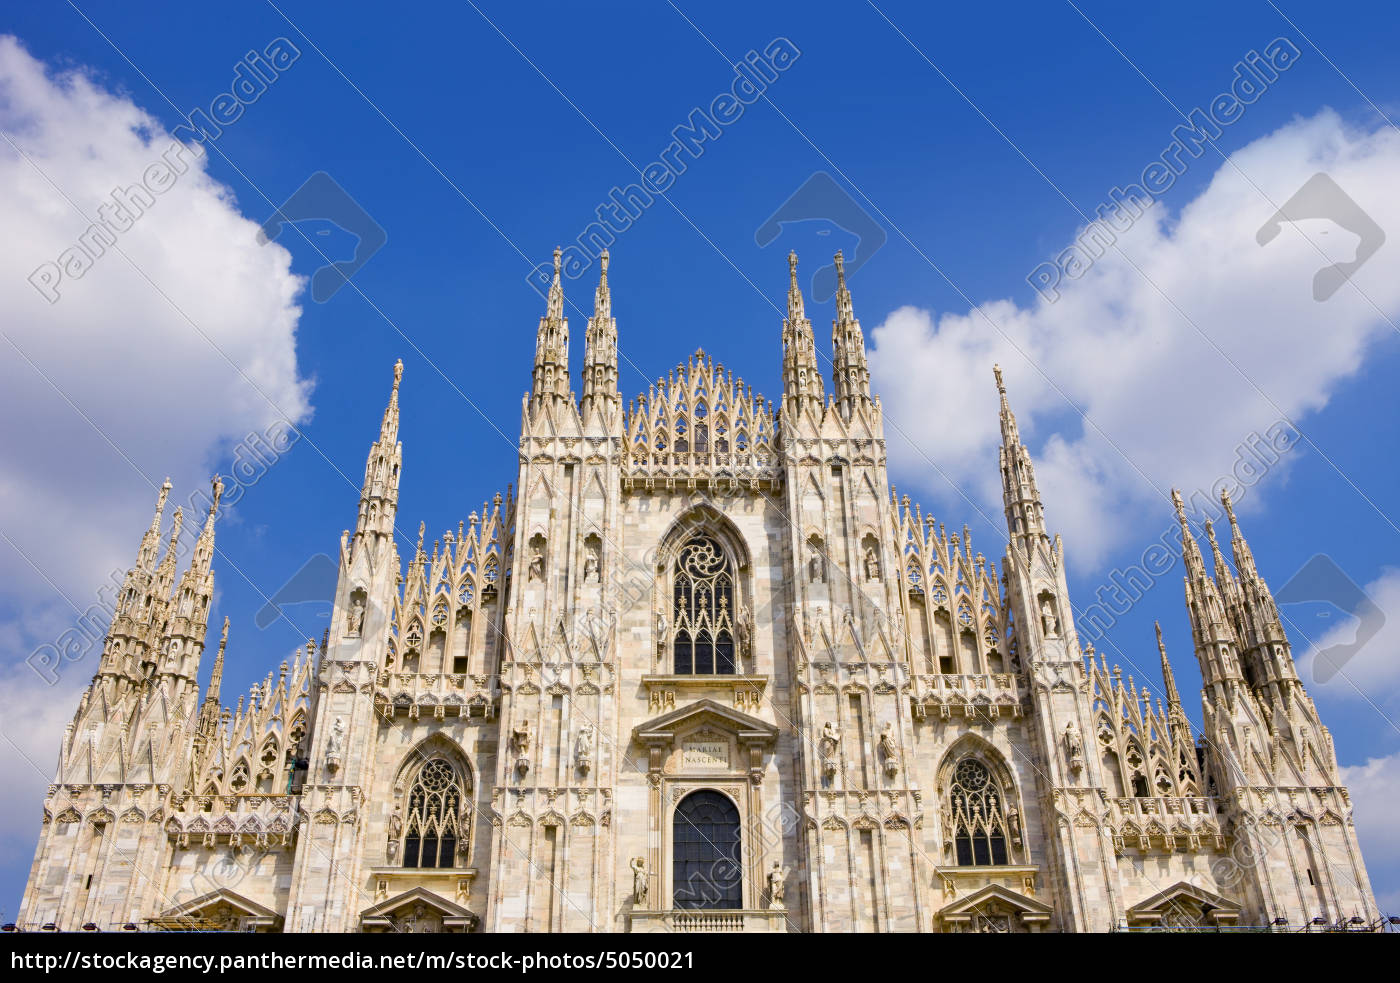 the symbol of Milan - Stock Photo - #5050021 - PantherMedia Stock Agency